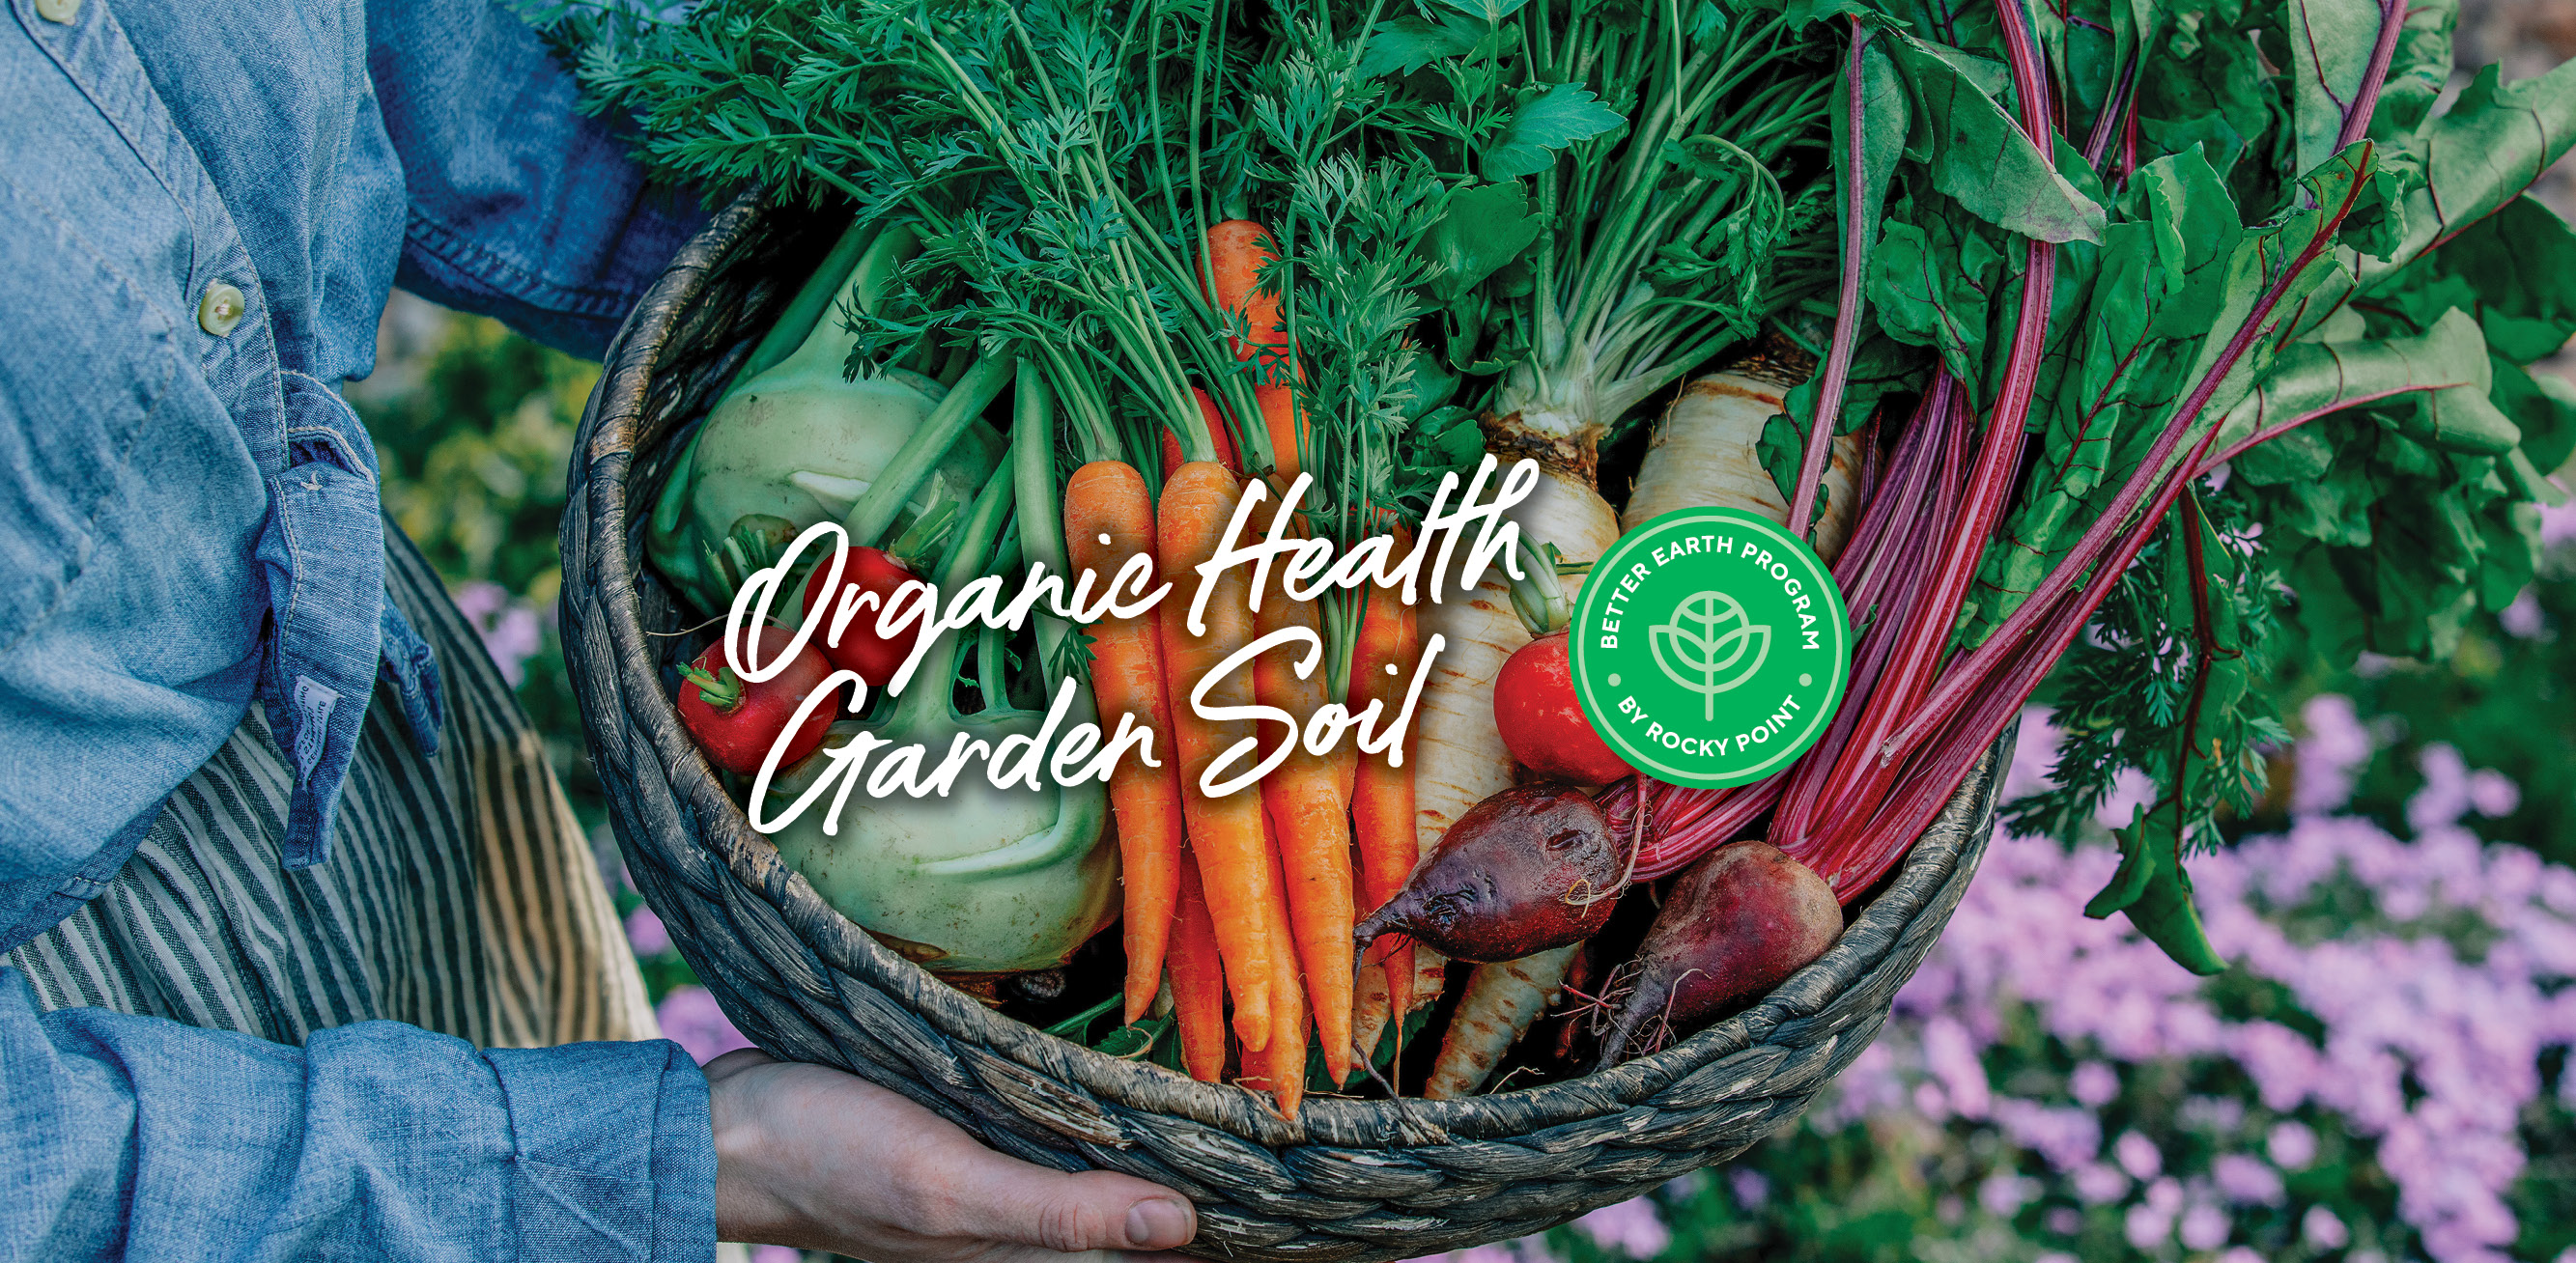 Organic Health Garden Soil